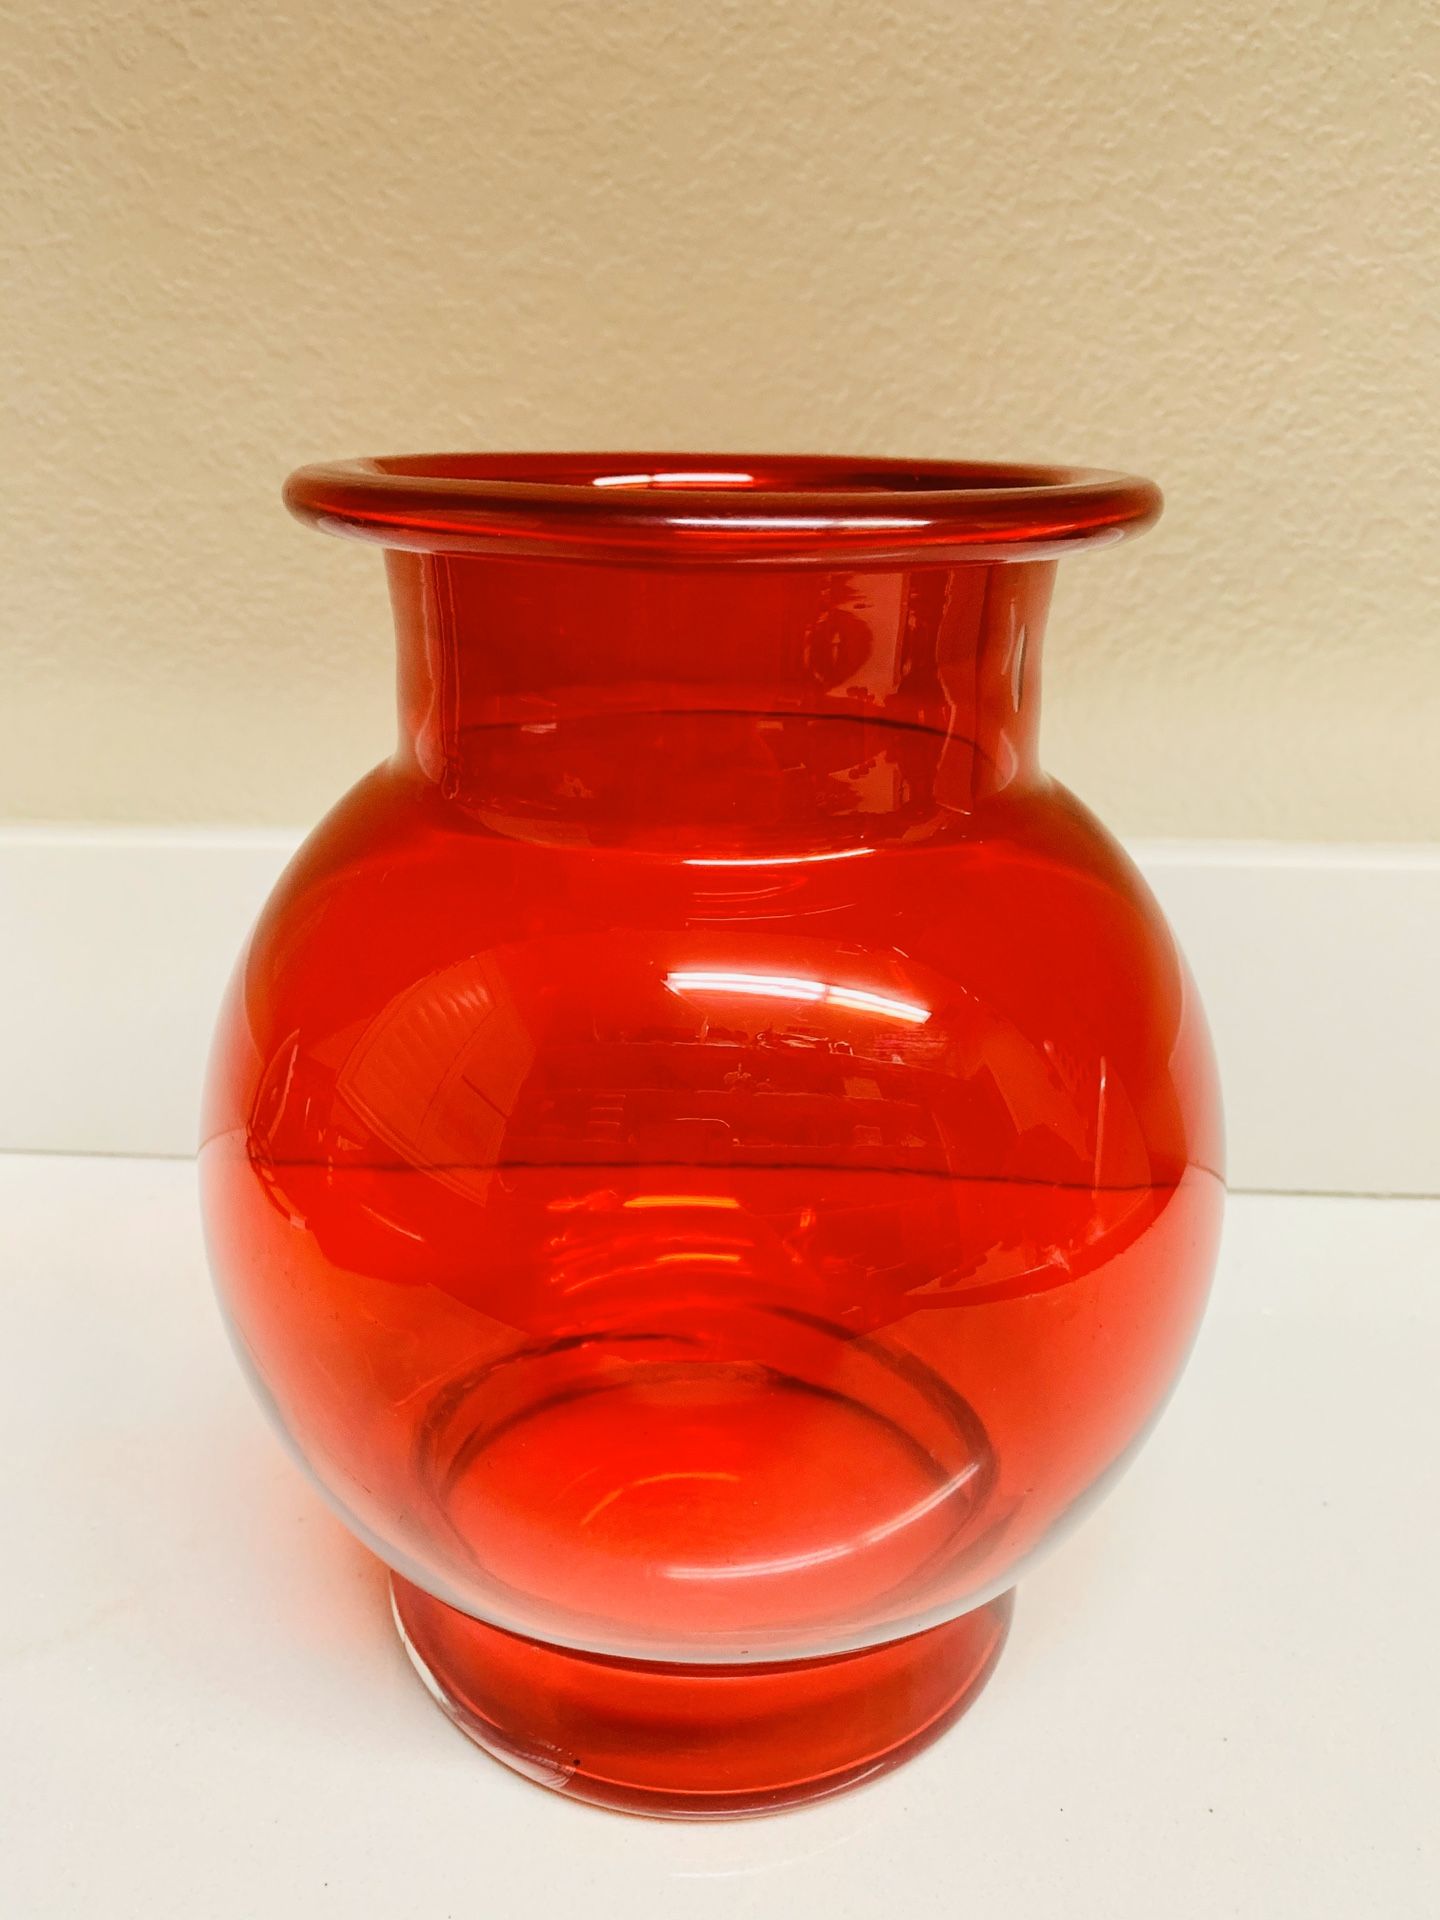 Light Red Glass Flower Vase 7”dia.(widest) x 8 1/2”tall